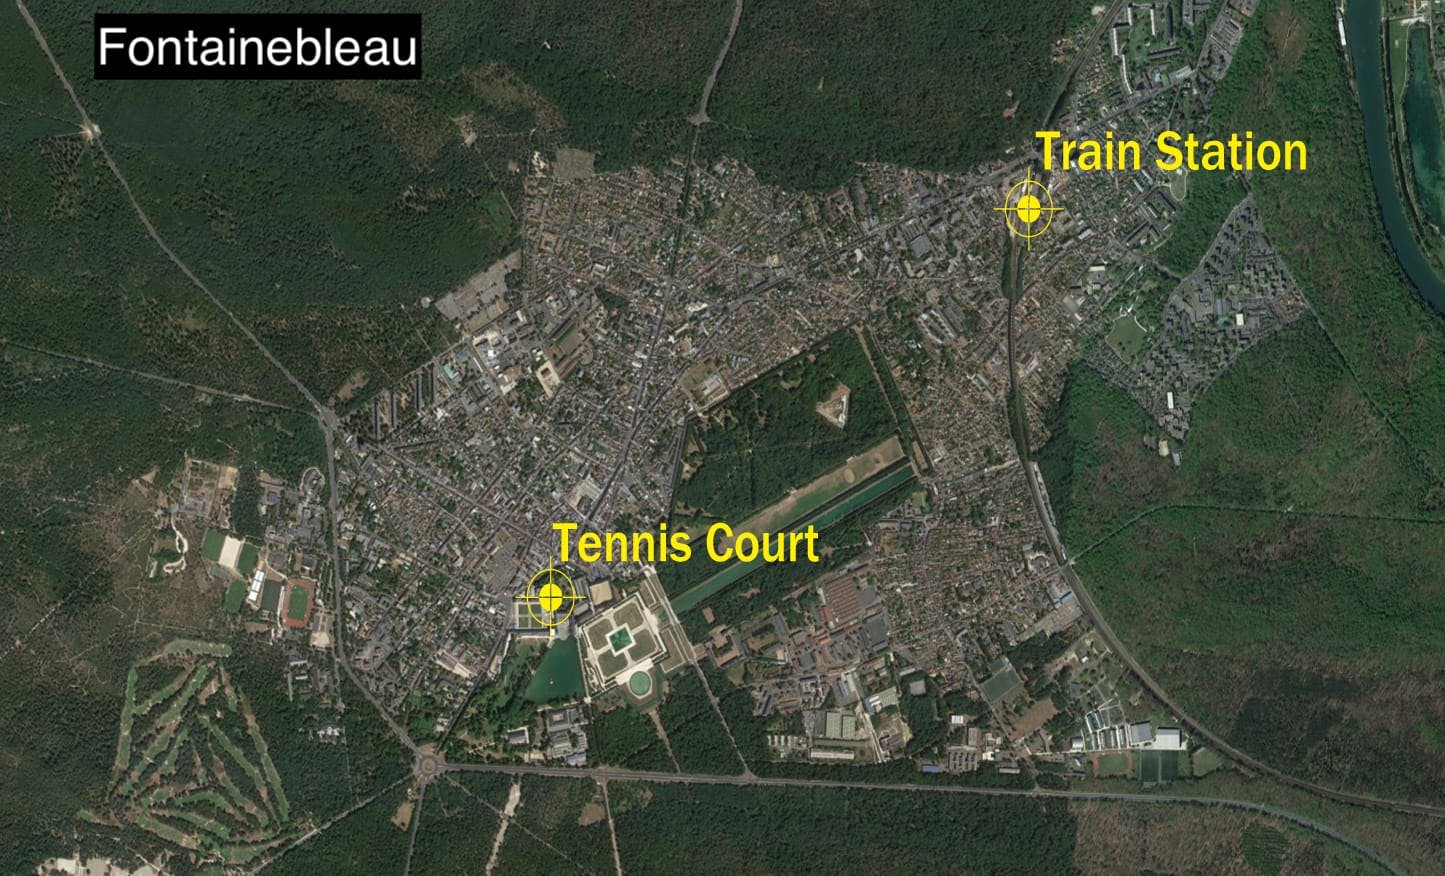 Fontainebleau city map